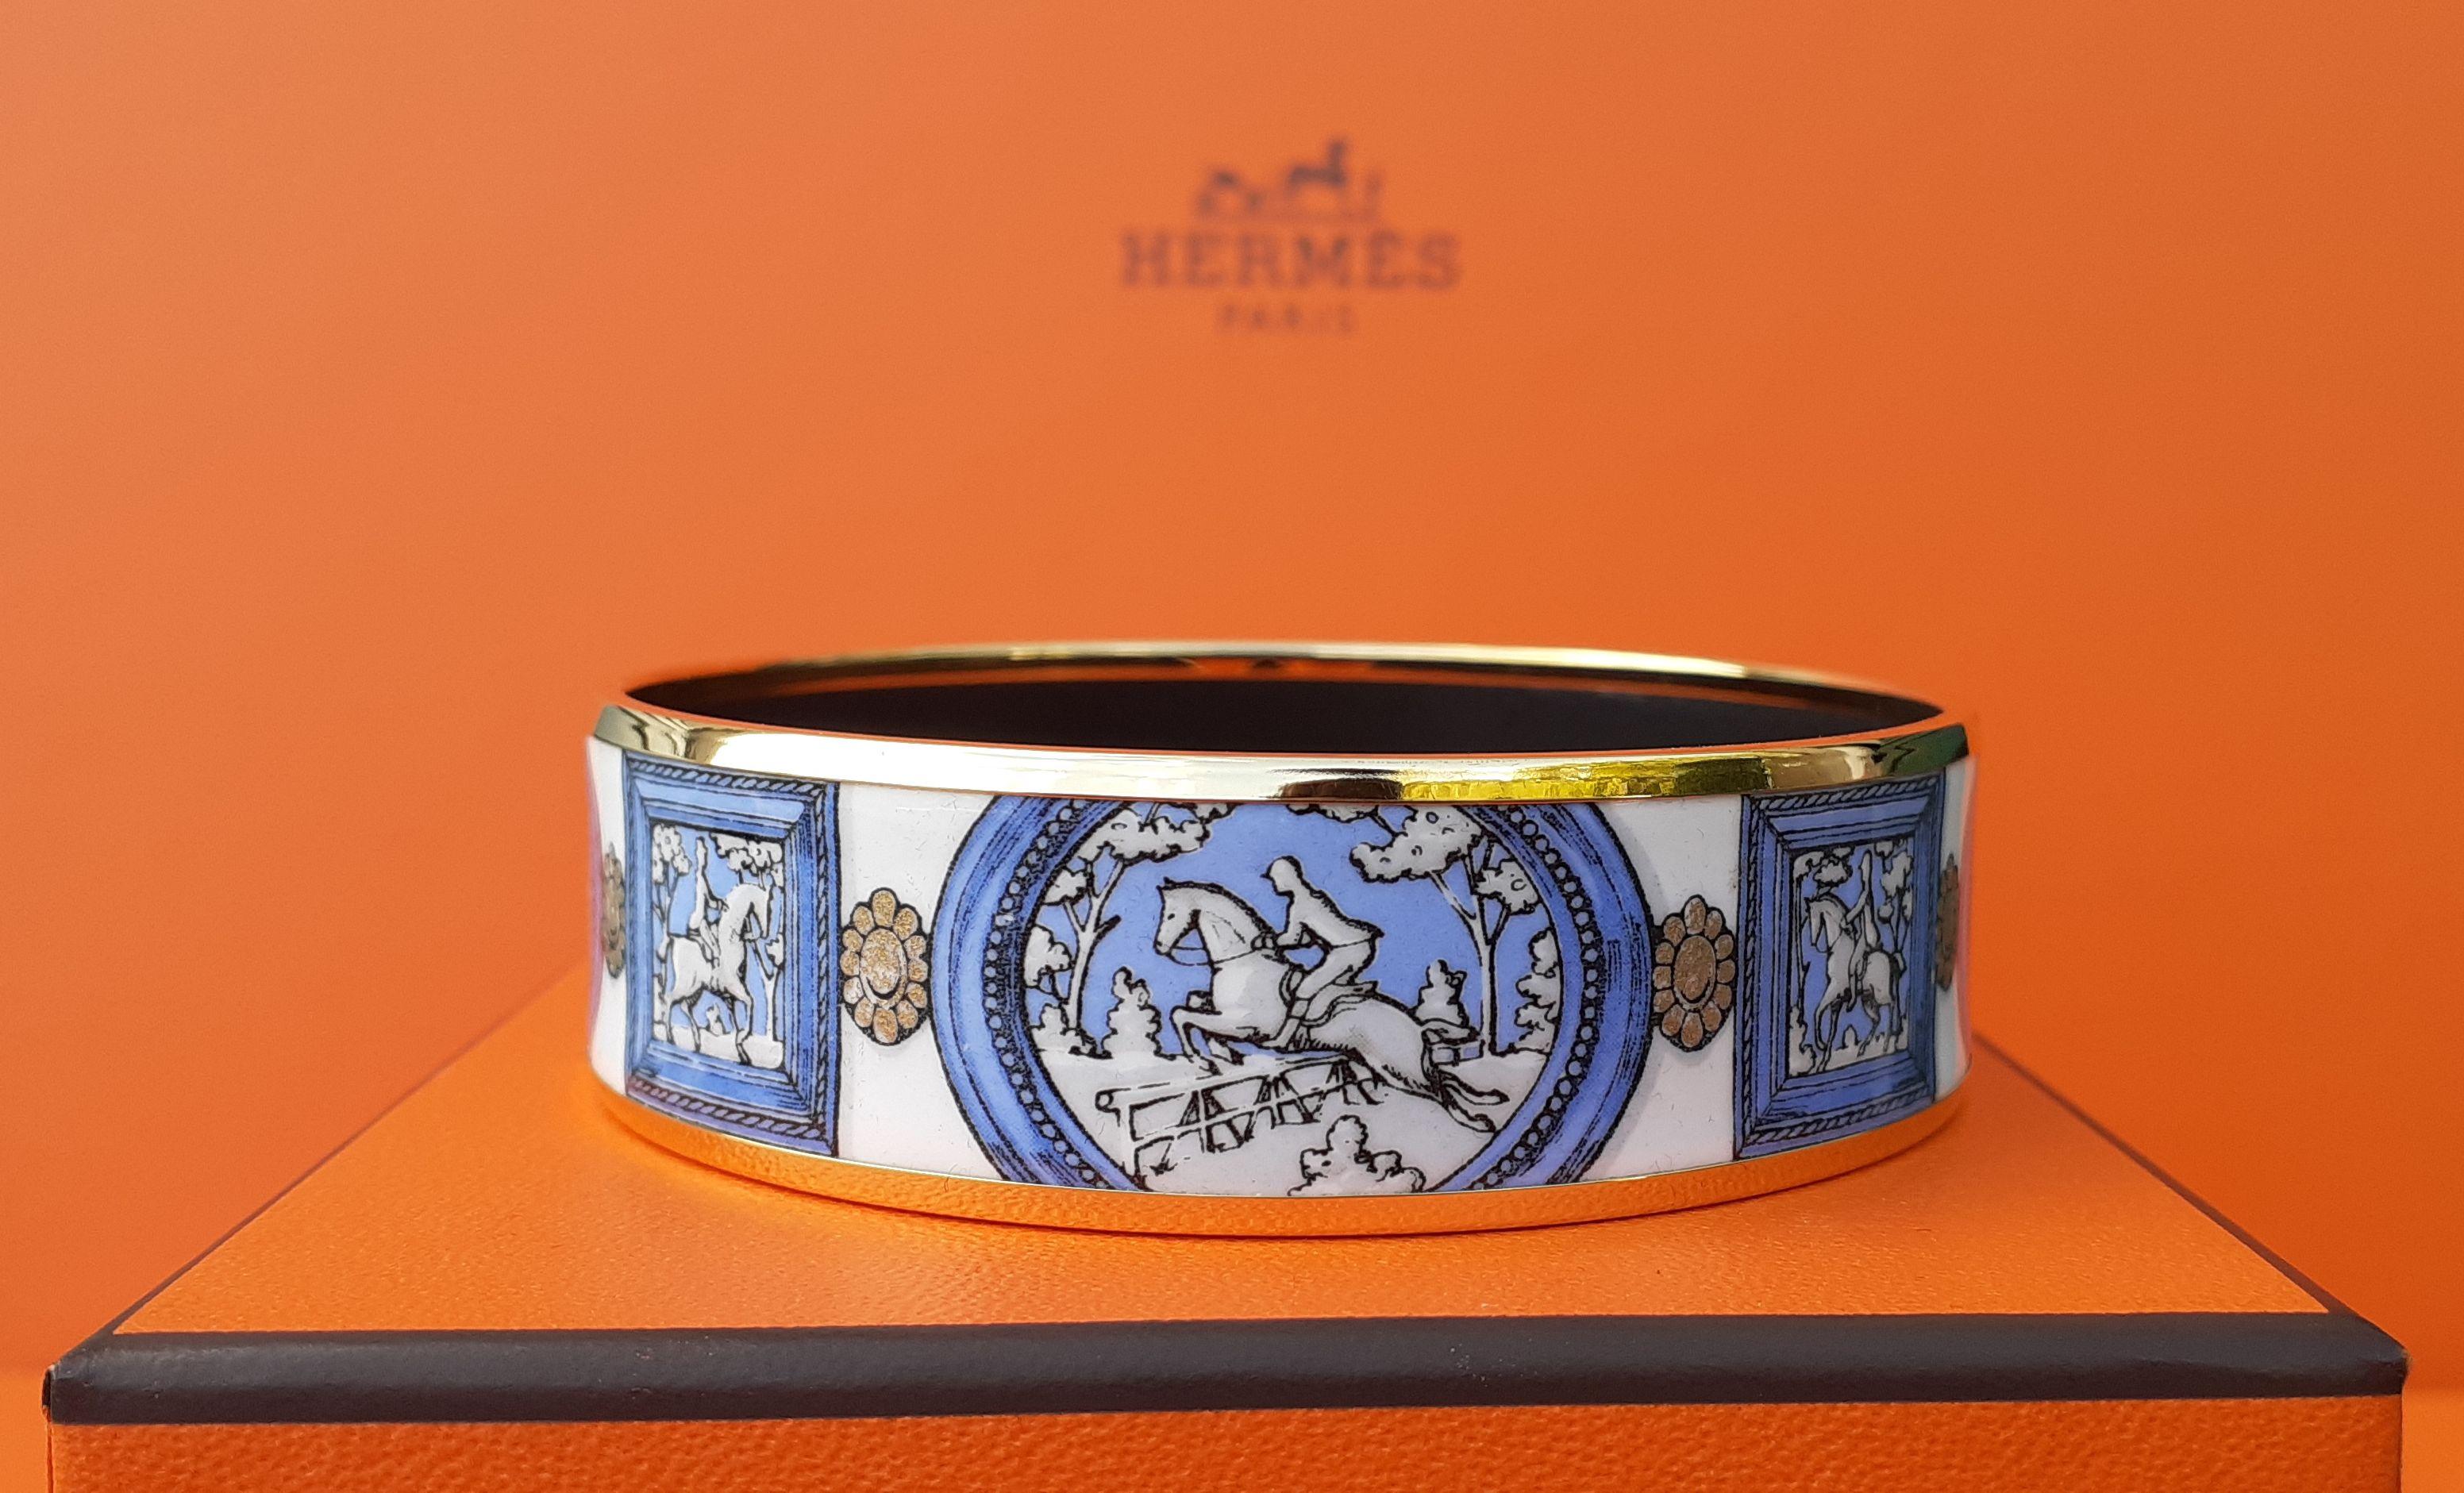 Absolutely Gorgeous Authentic Vintage Hermès Bracelet

Pattern: 